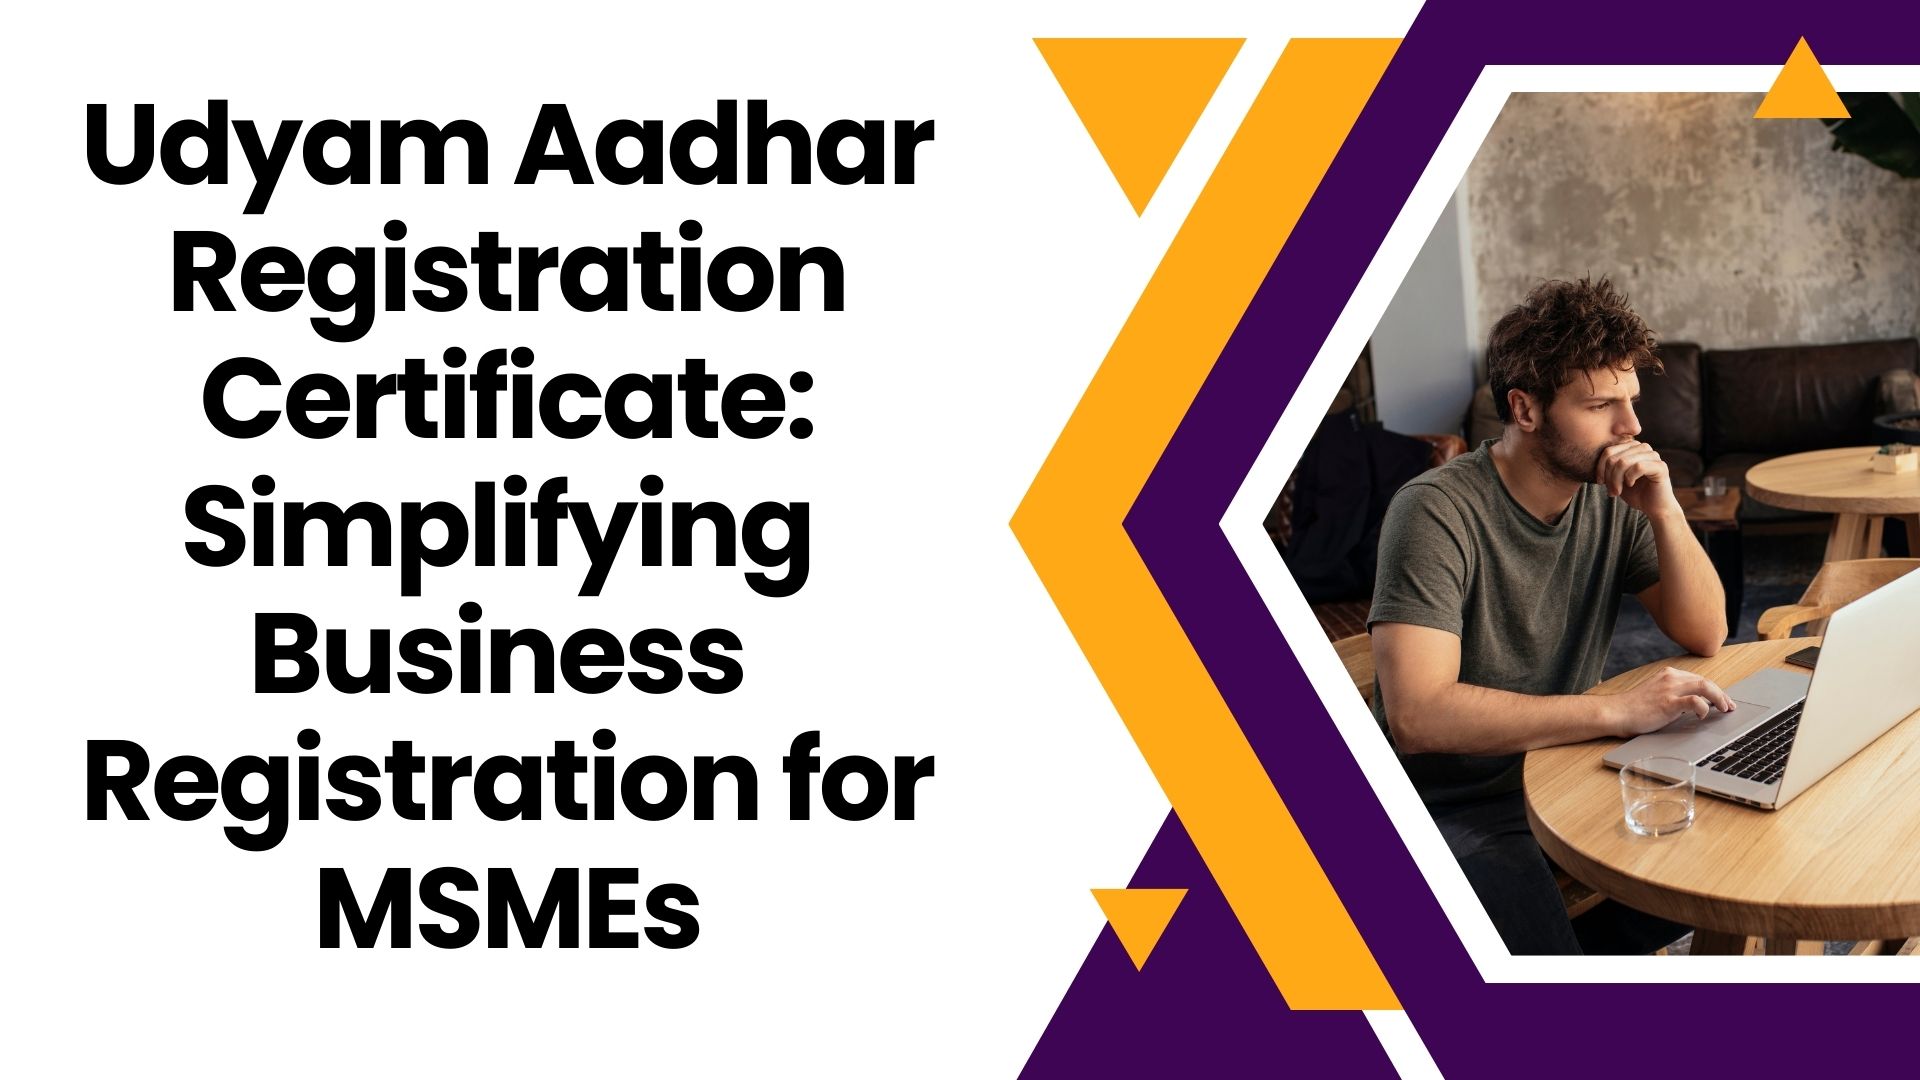 Udyam Aadhar Registration Certificate: Simplifying Business Registration for MSMEs